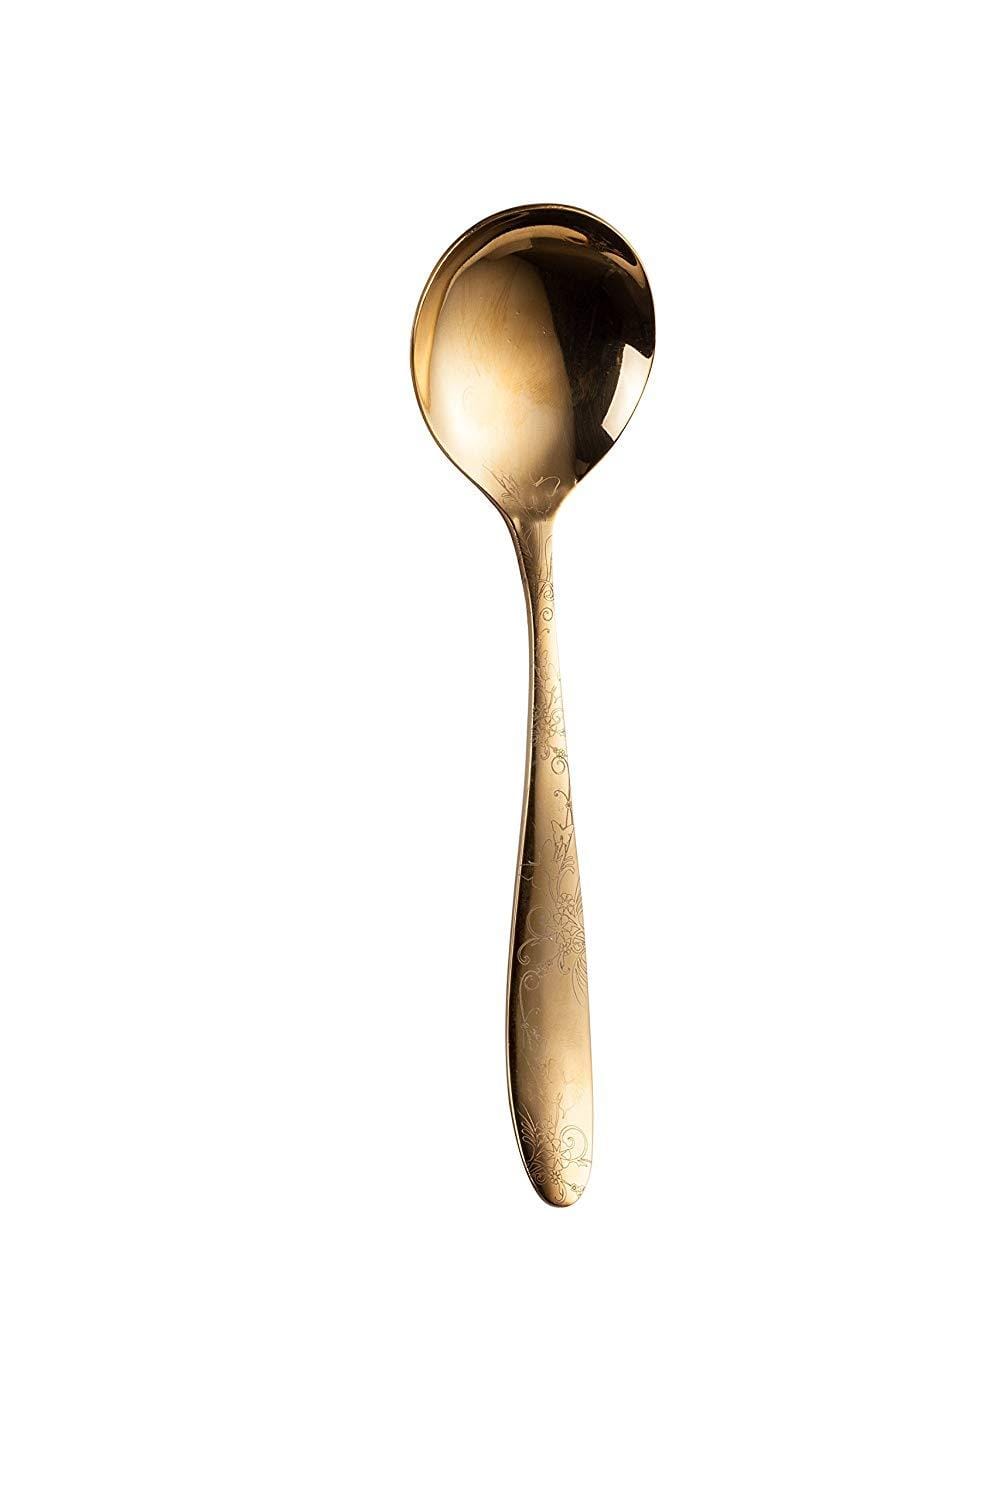 Sanjeev Kapoor Arc Stainless Steel Spoon Set, 6-Pieces | Spoon